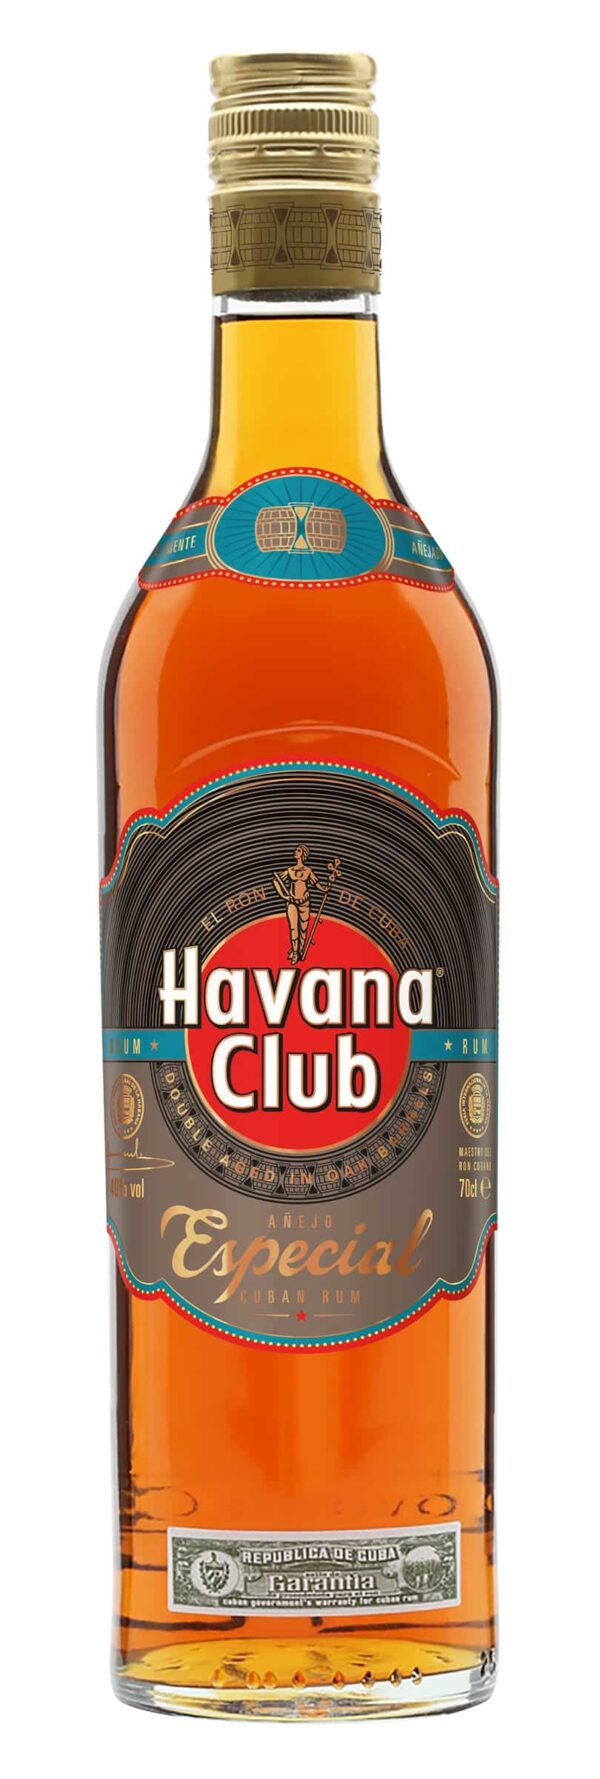 Havana Club New Especial